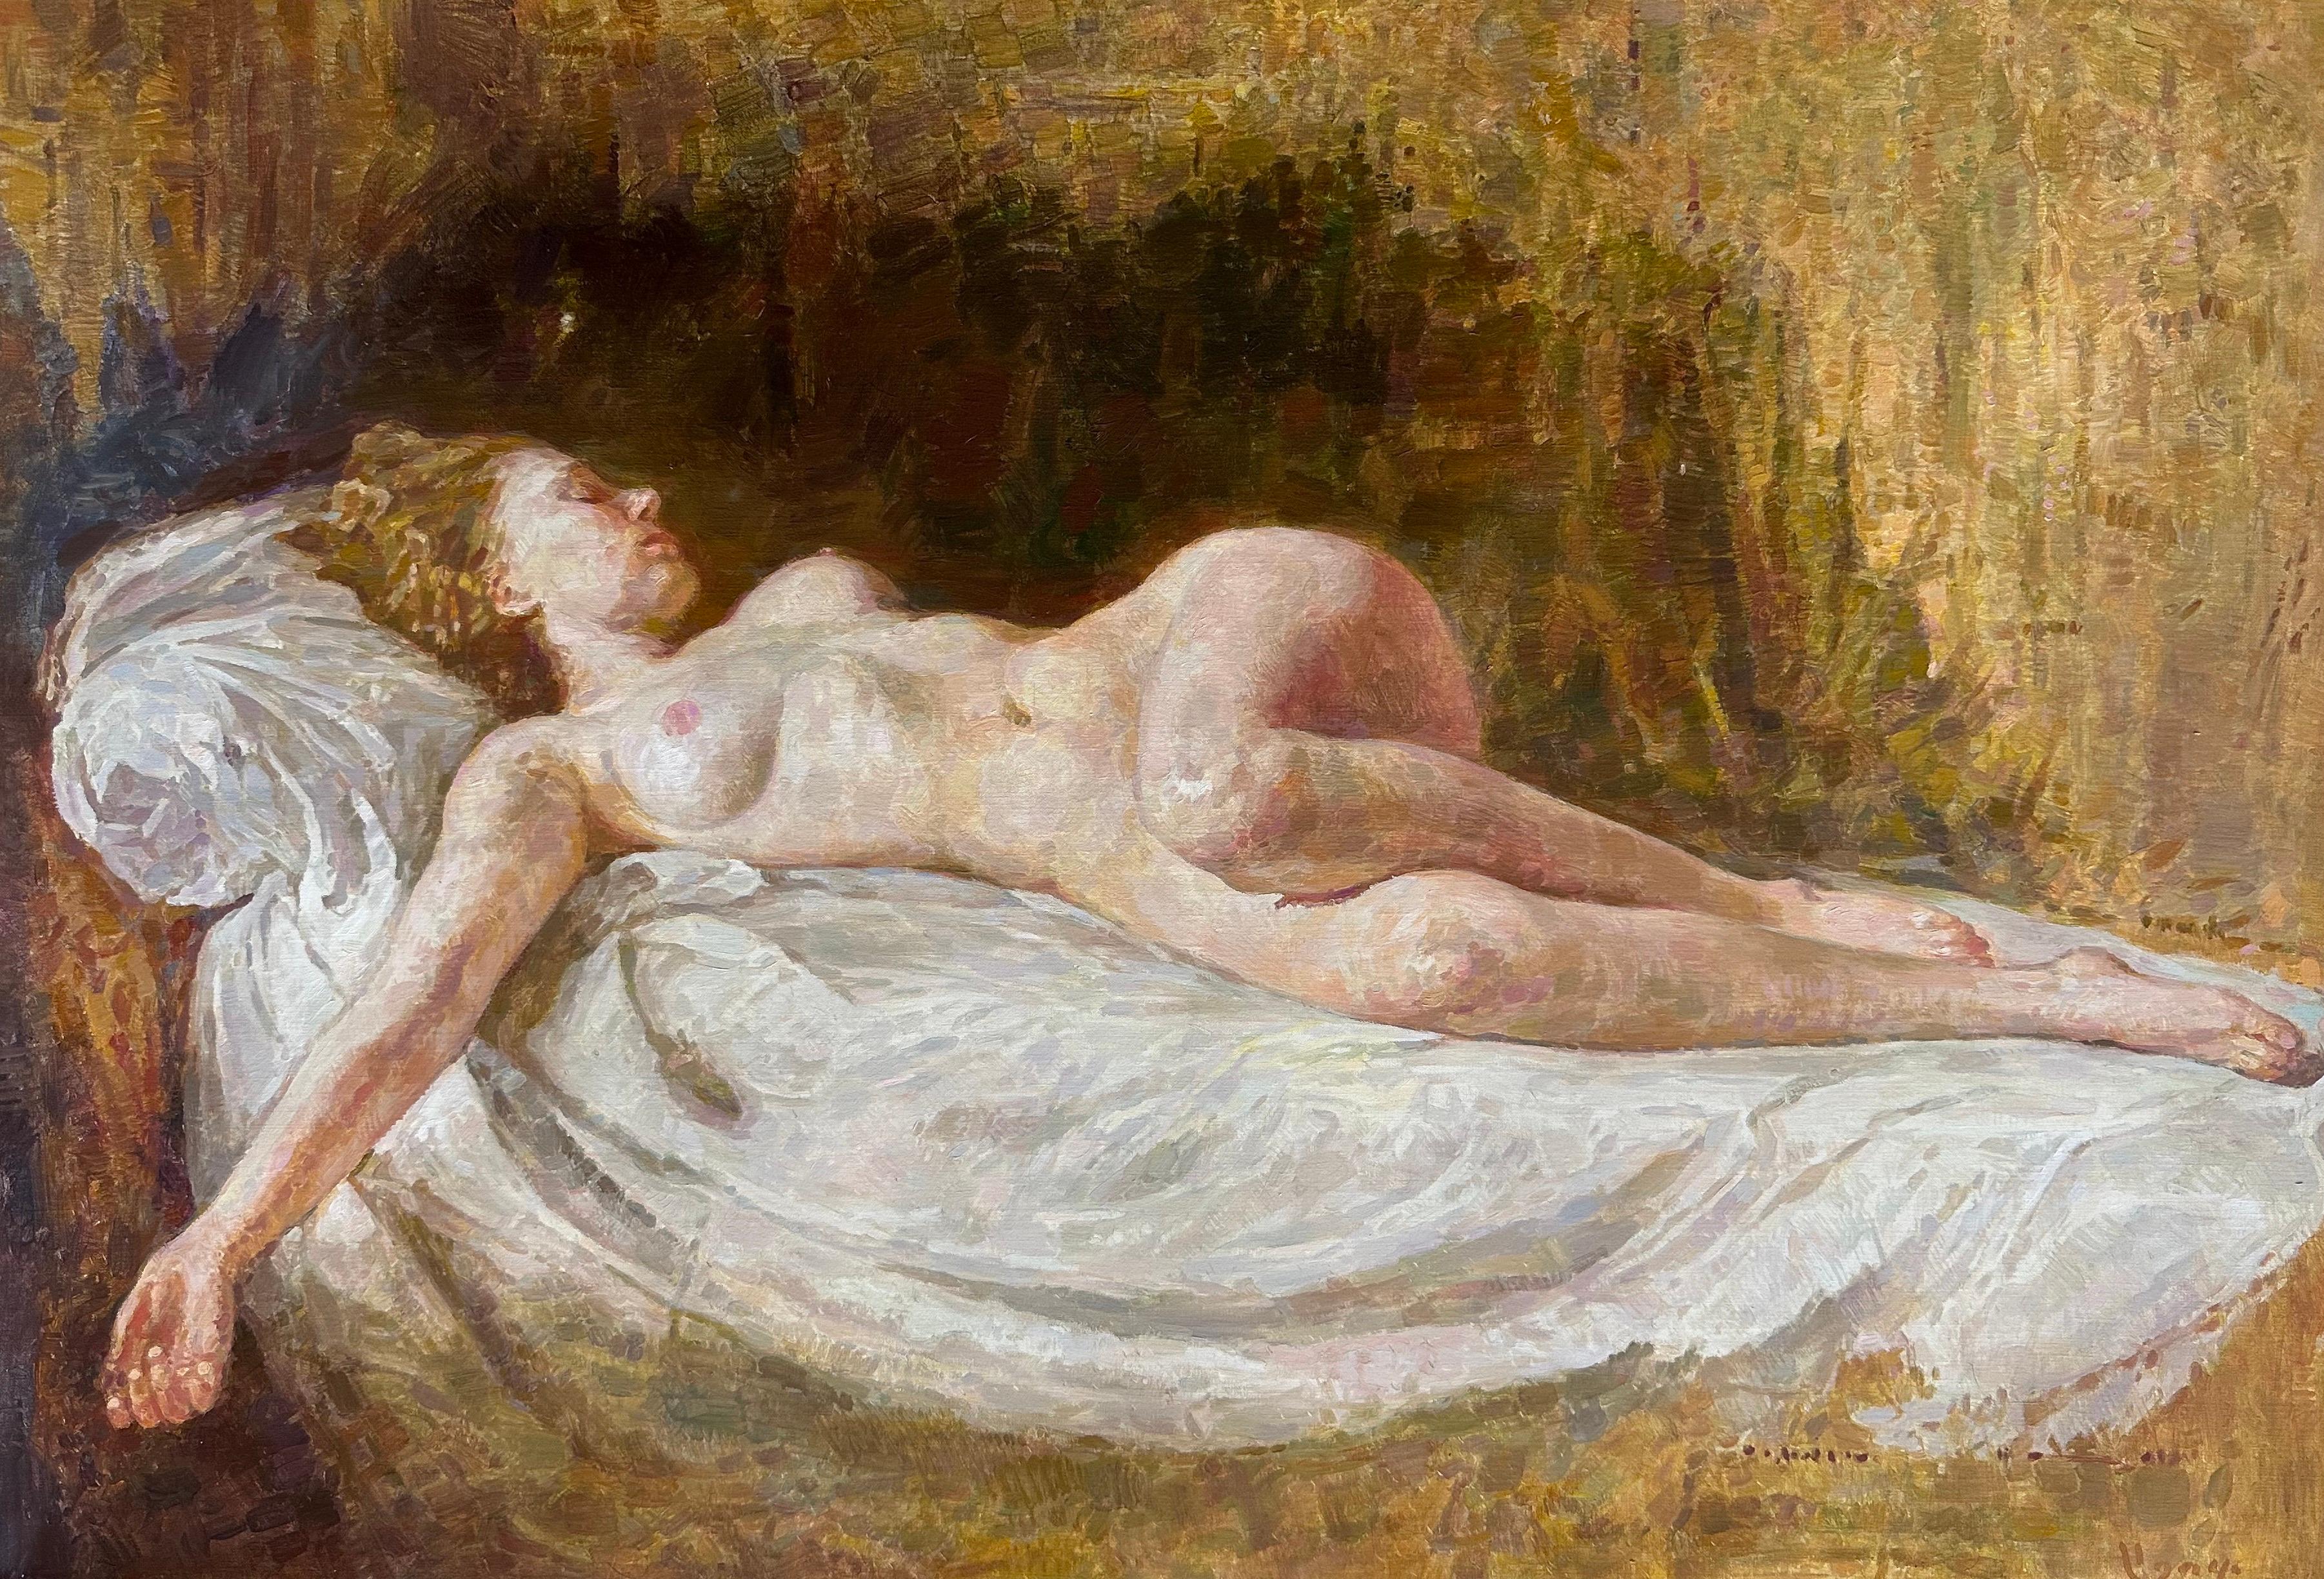 Ashot Muradyan Nude Painting - Nude Woman, Original Oil Painting, Handmade Artwork, One of a Kind